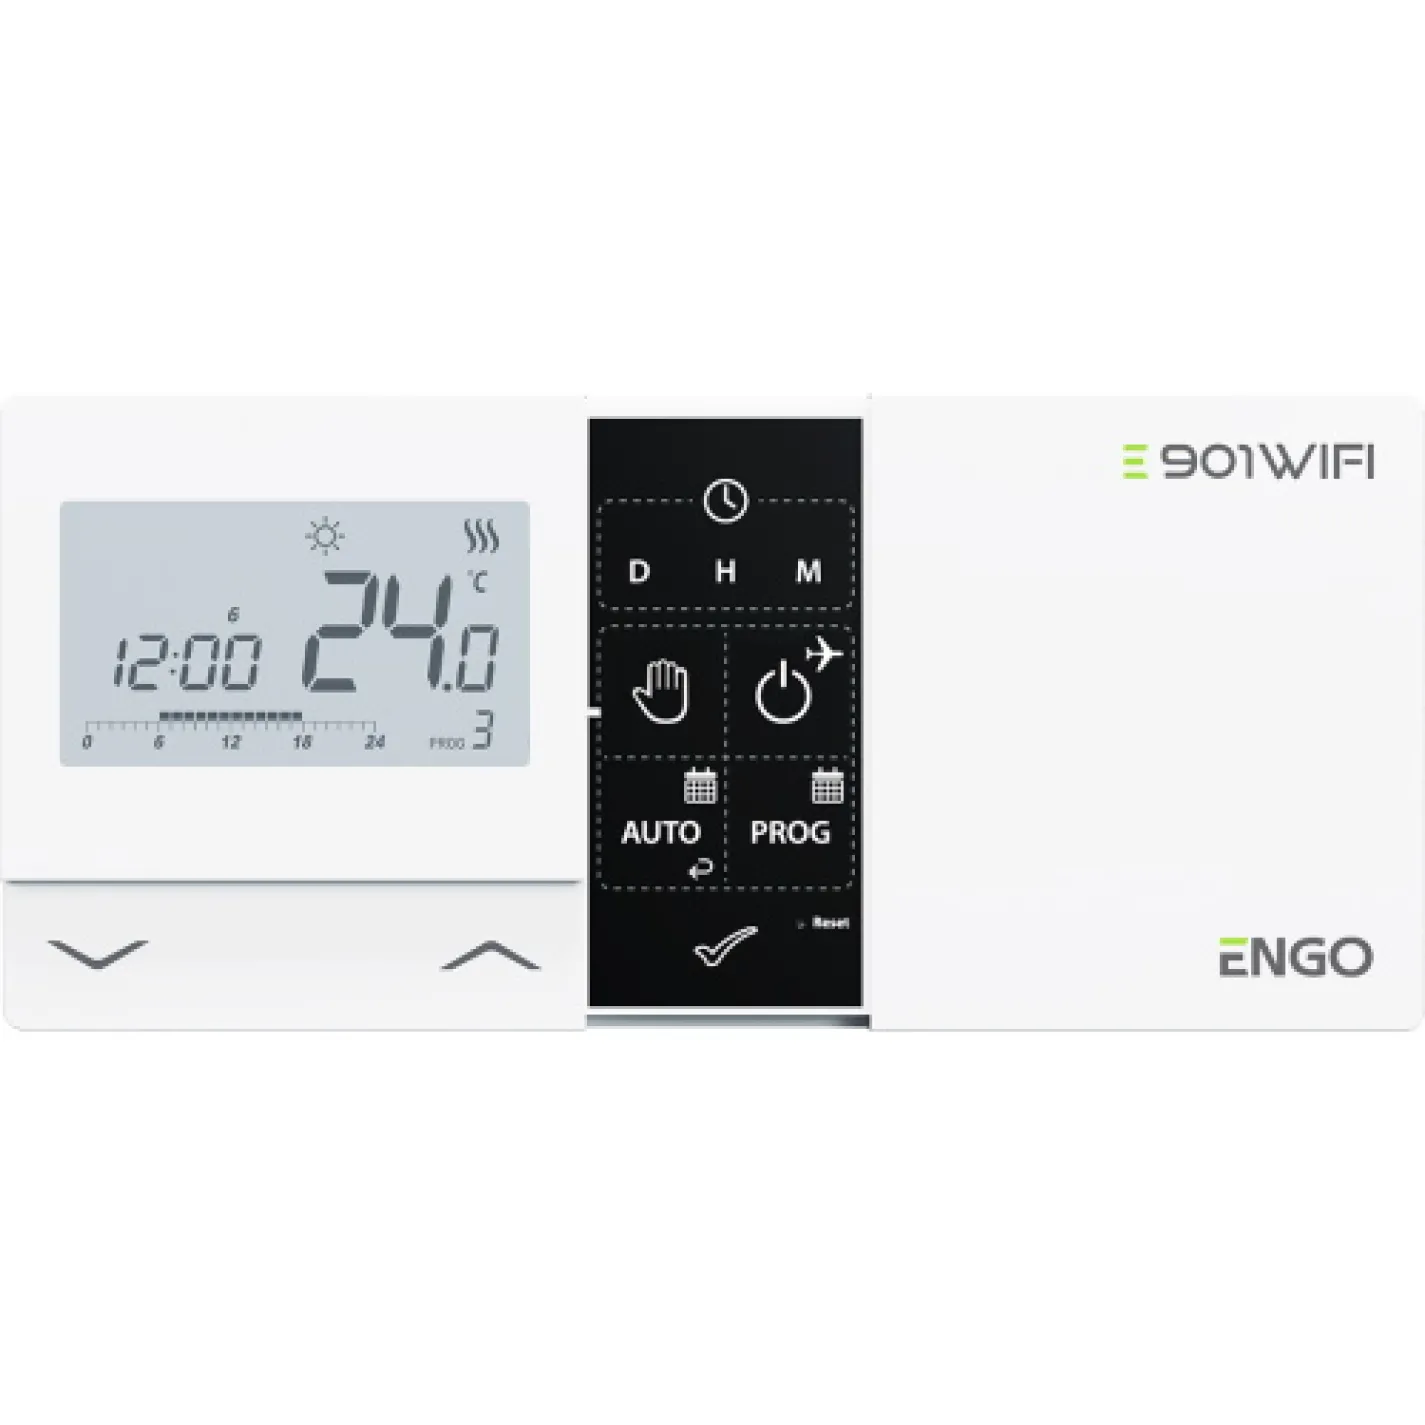 Беспроводной интернет-терморегулятор Engo E901 WiFi - Фото 2